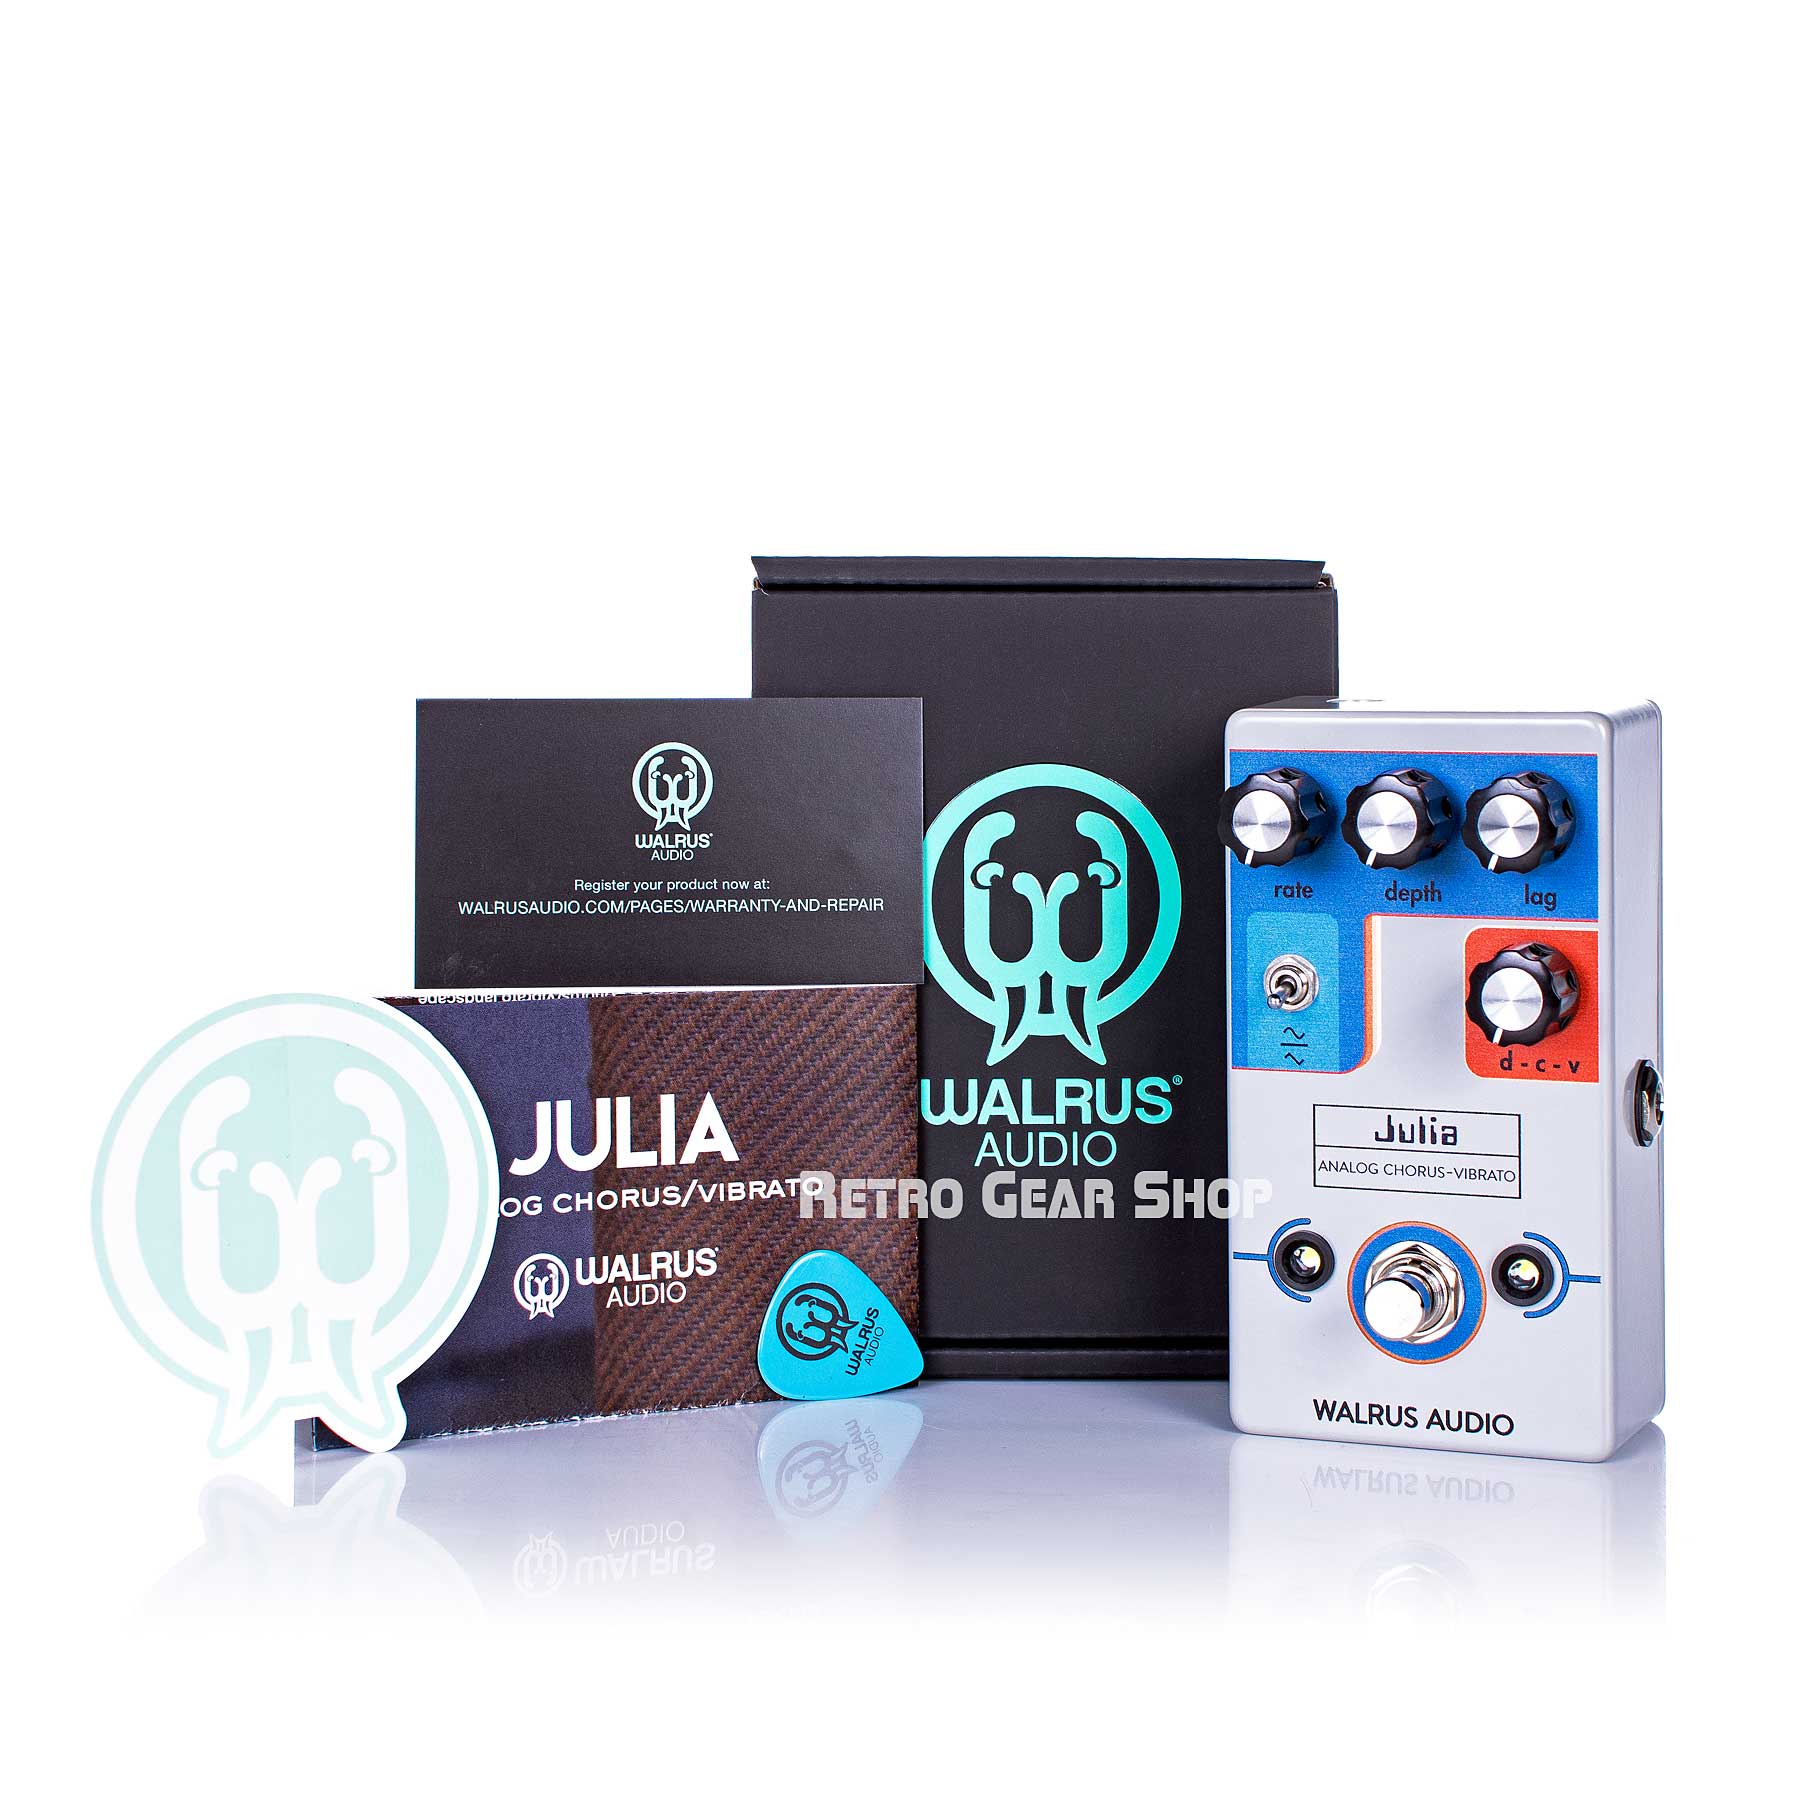 Walrus Audio Julia Chorus Vibrato Custom Retro Limited Edition Box Manuals Extras